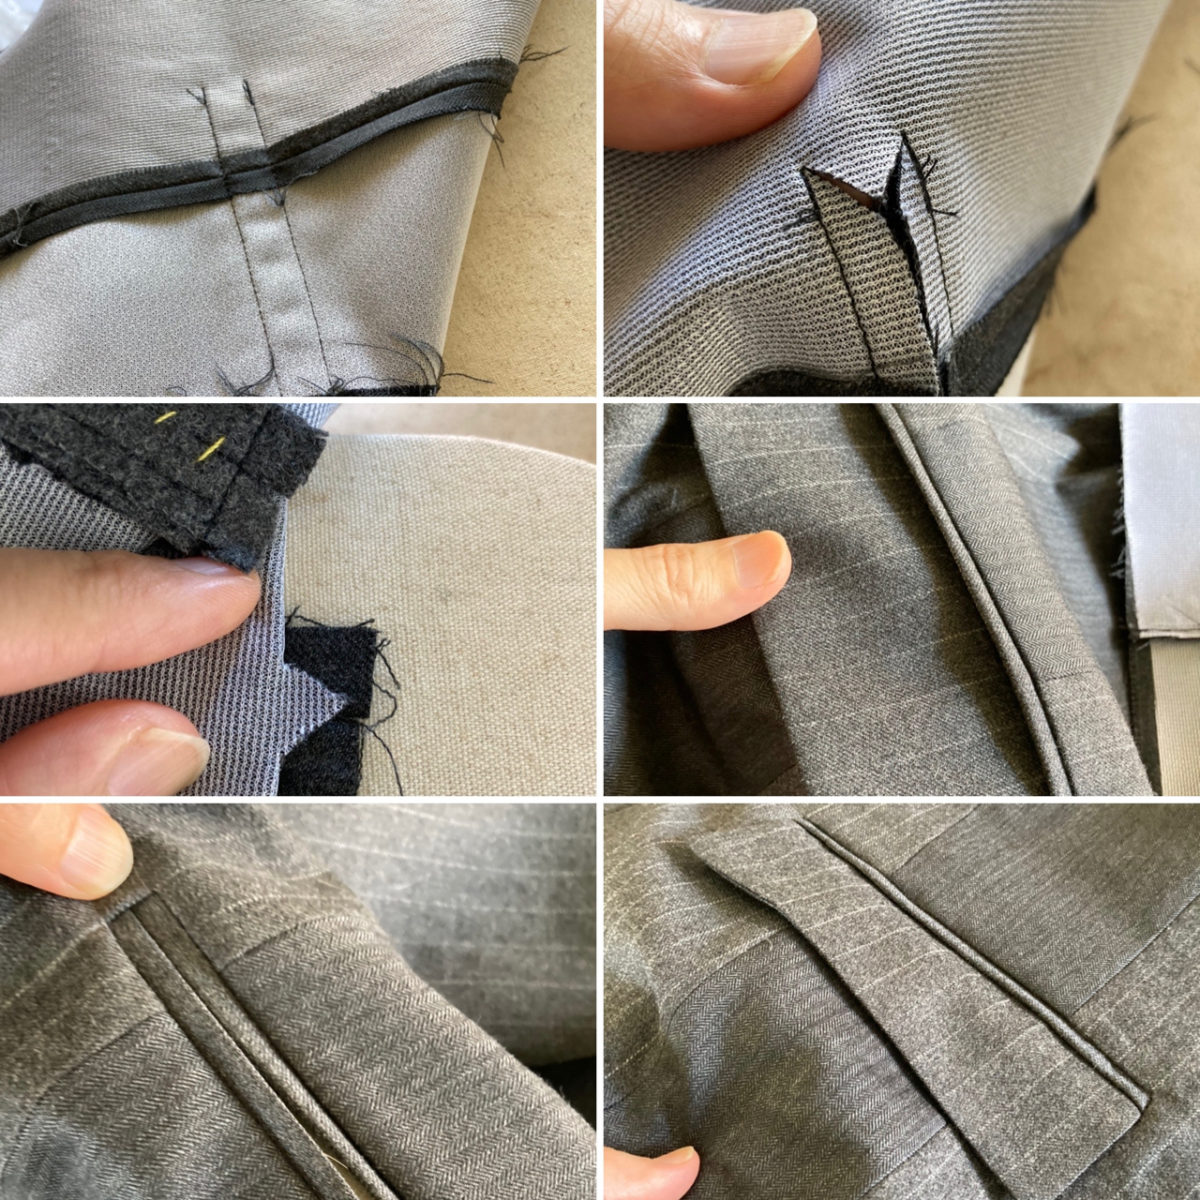 Men's Suit Repurposing Project: Creating a 1940s Women's Suit - Threads